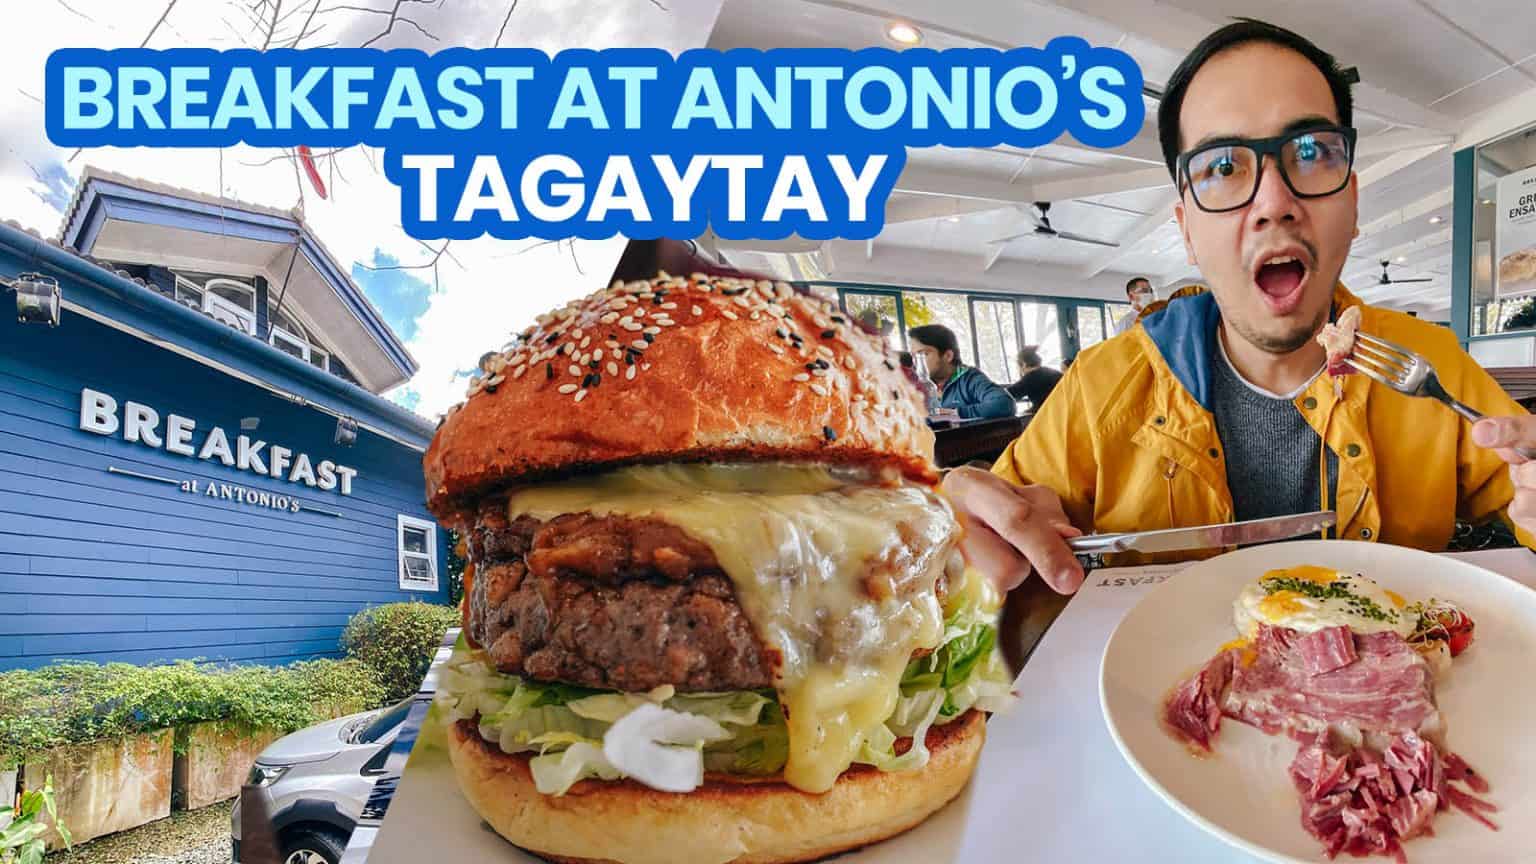 BREAKFAST AT ANTONIO'S TAGAYTAY Restaurant Guide & Menu The Poor